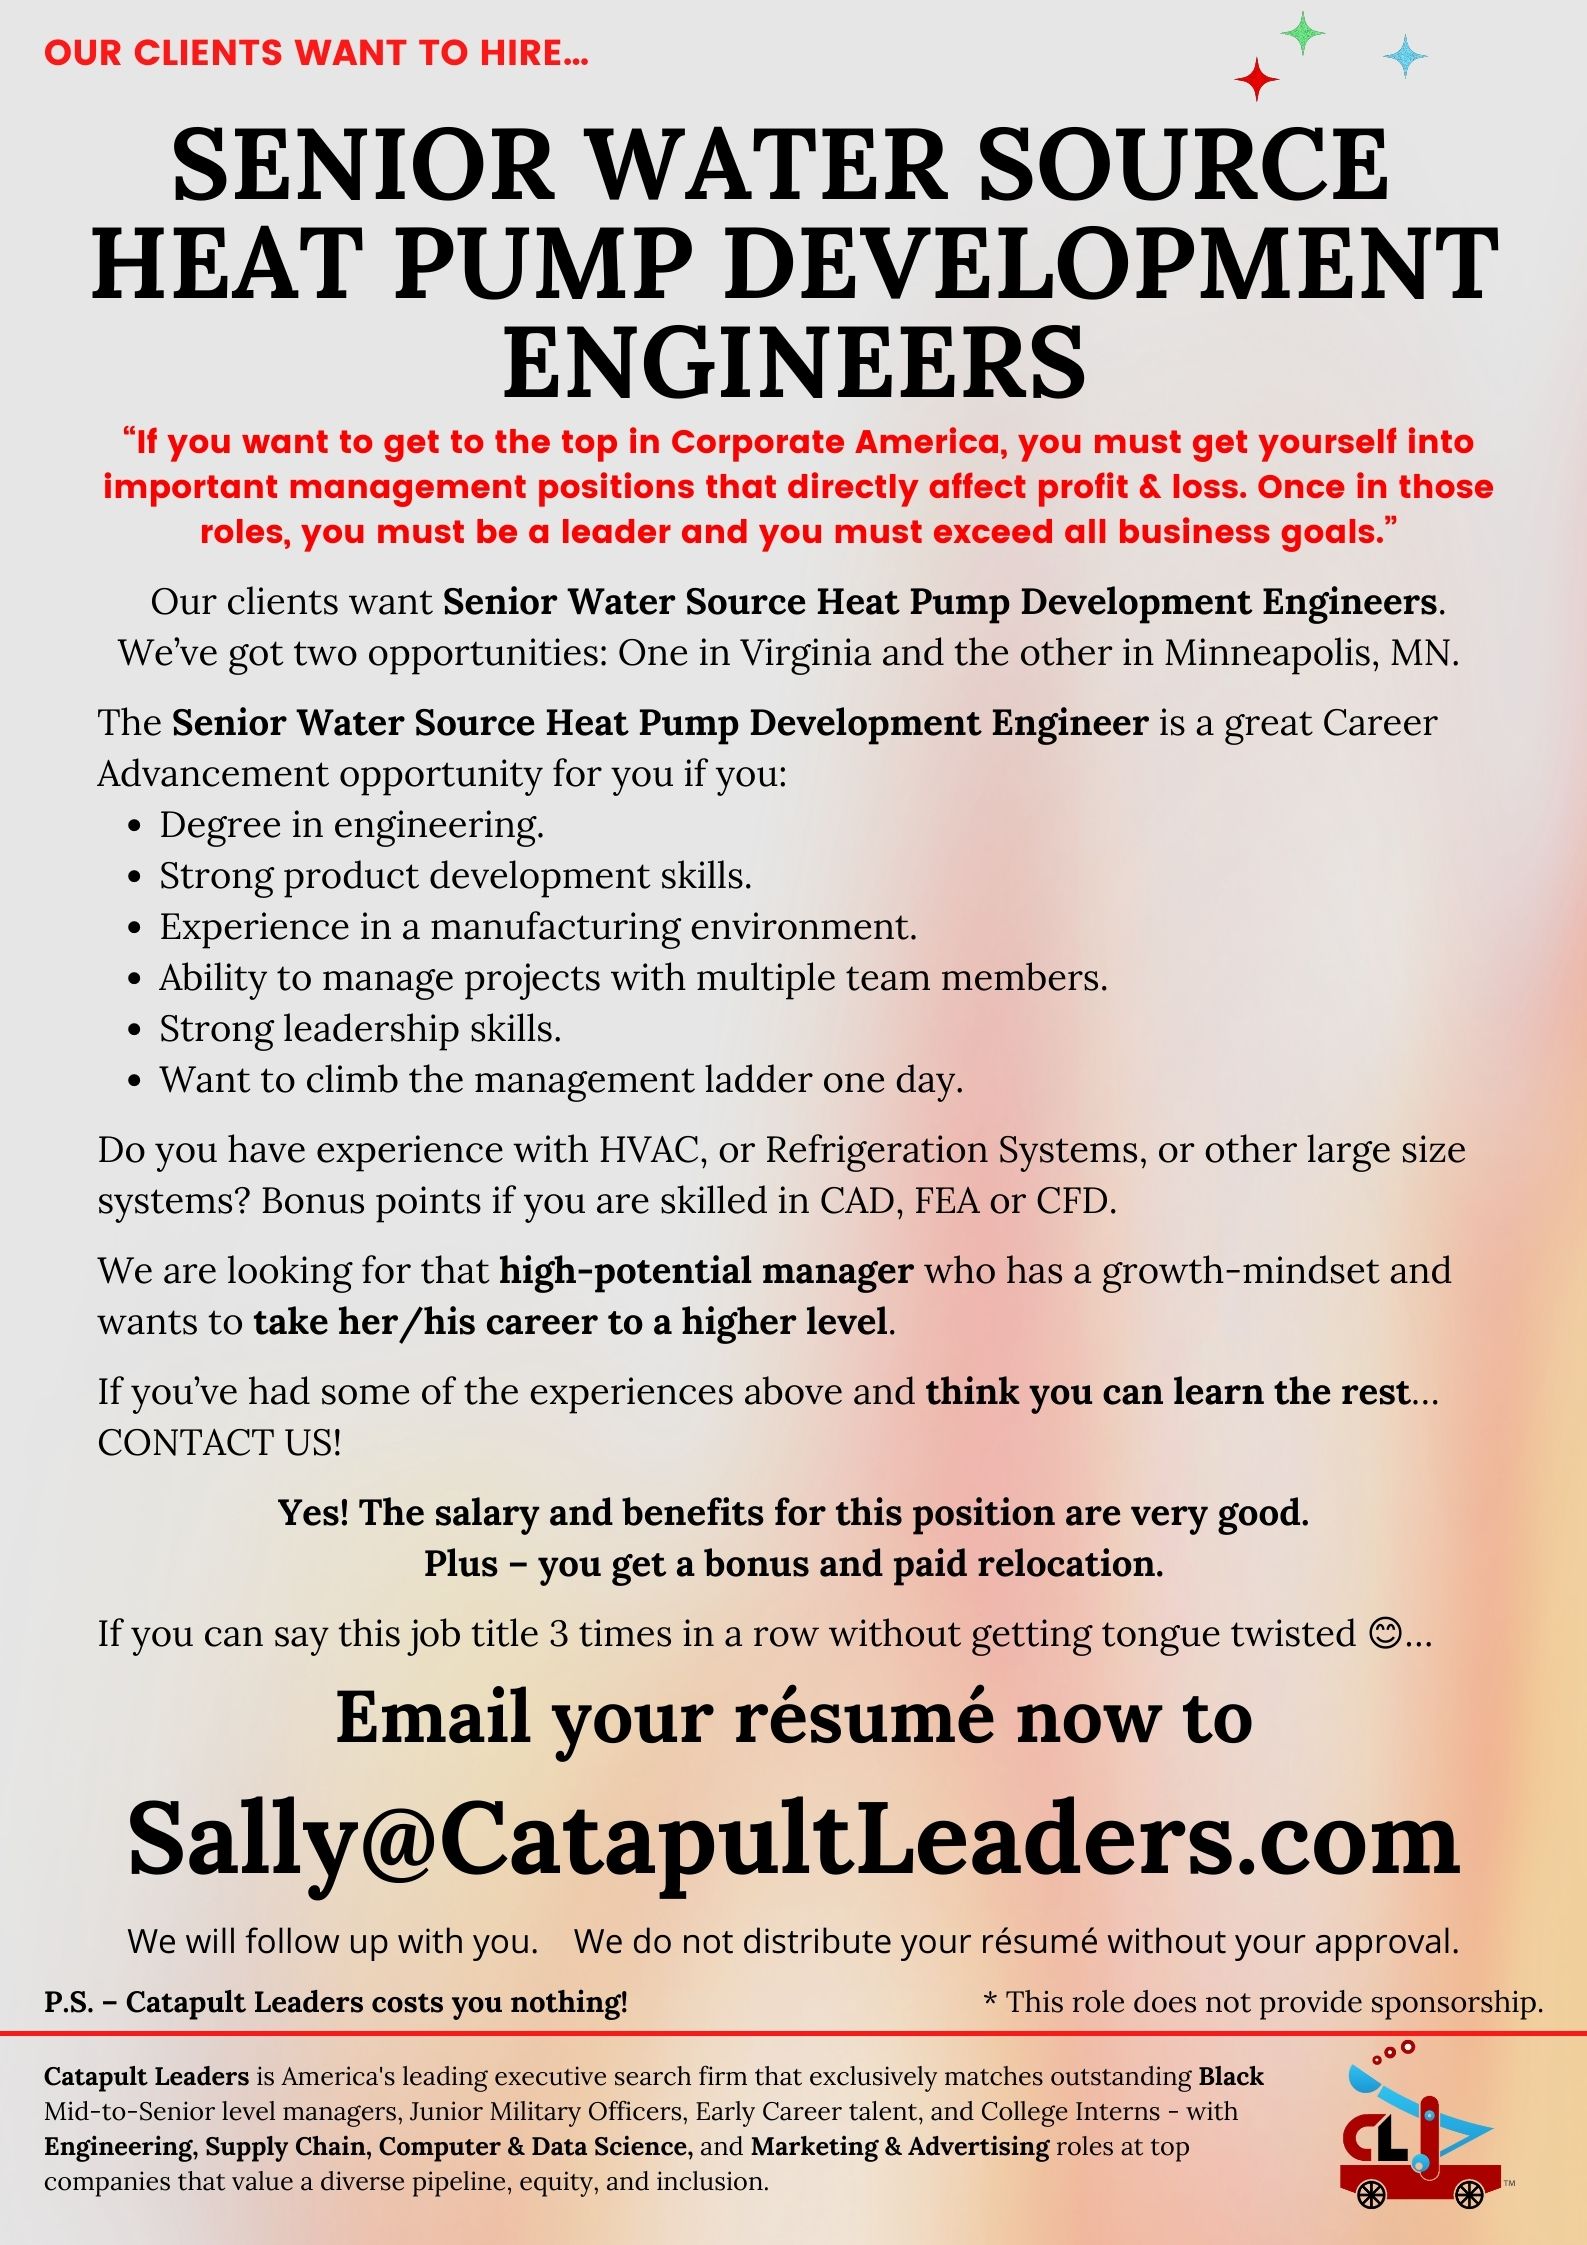 Senior Water Source Heat Pump Development Engineers - Catapult Leaders - JOBS